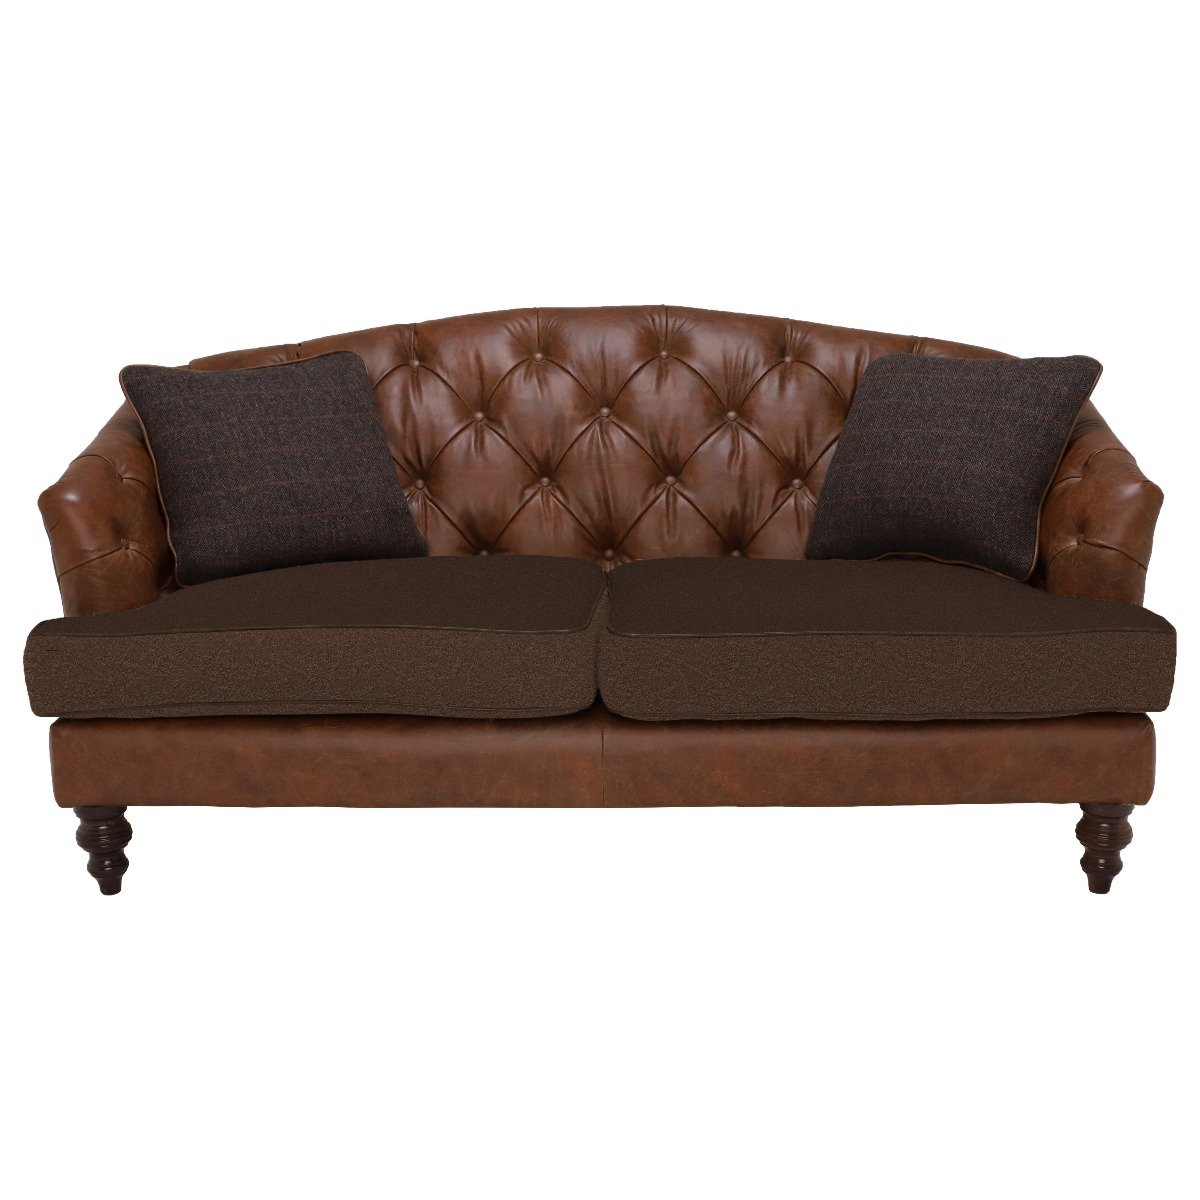 Tetrad Harris Tweed Dalmore Petit 2 Seater Sofa, Brown Fabric | Barker & Stonehouse